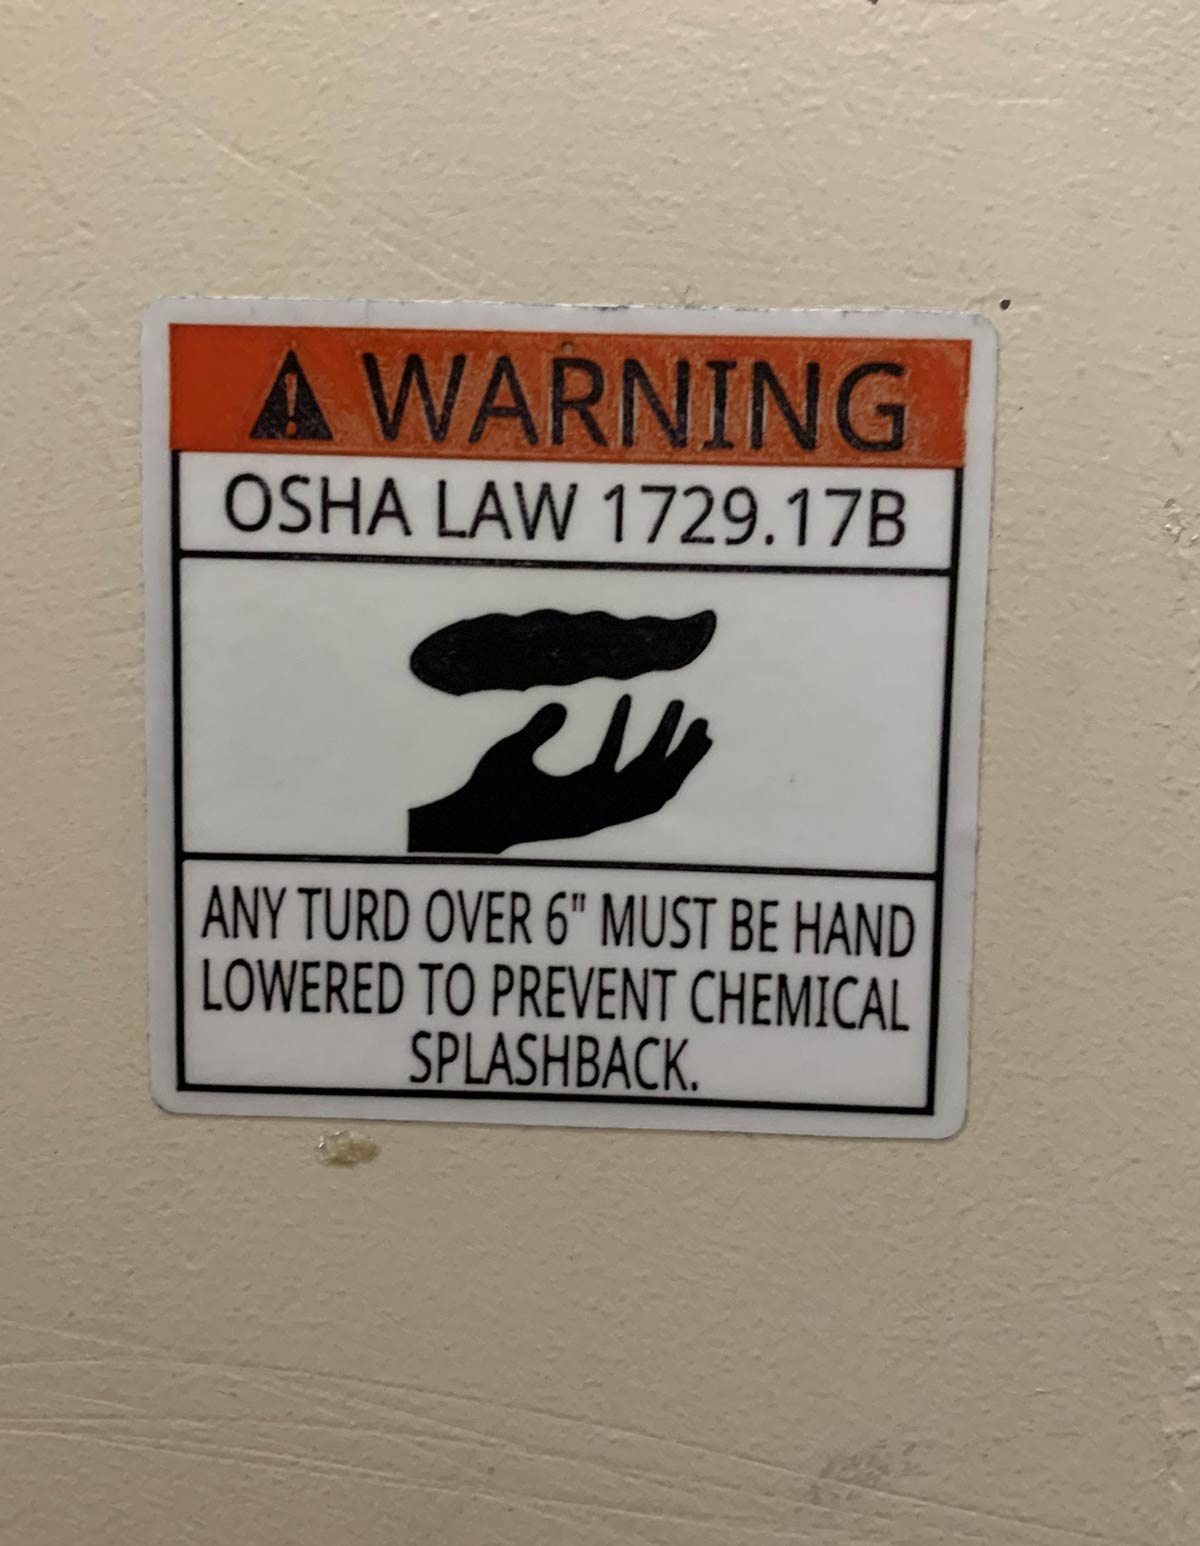 New OSHA rule